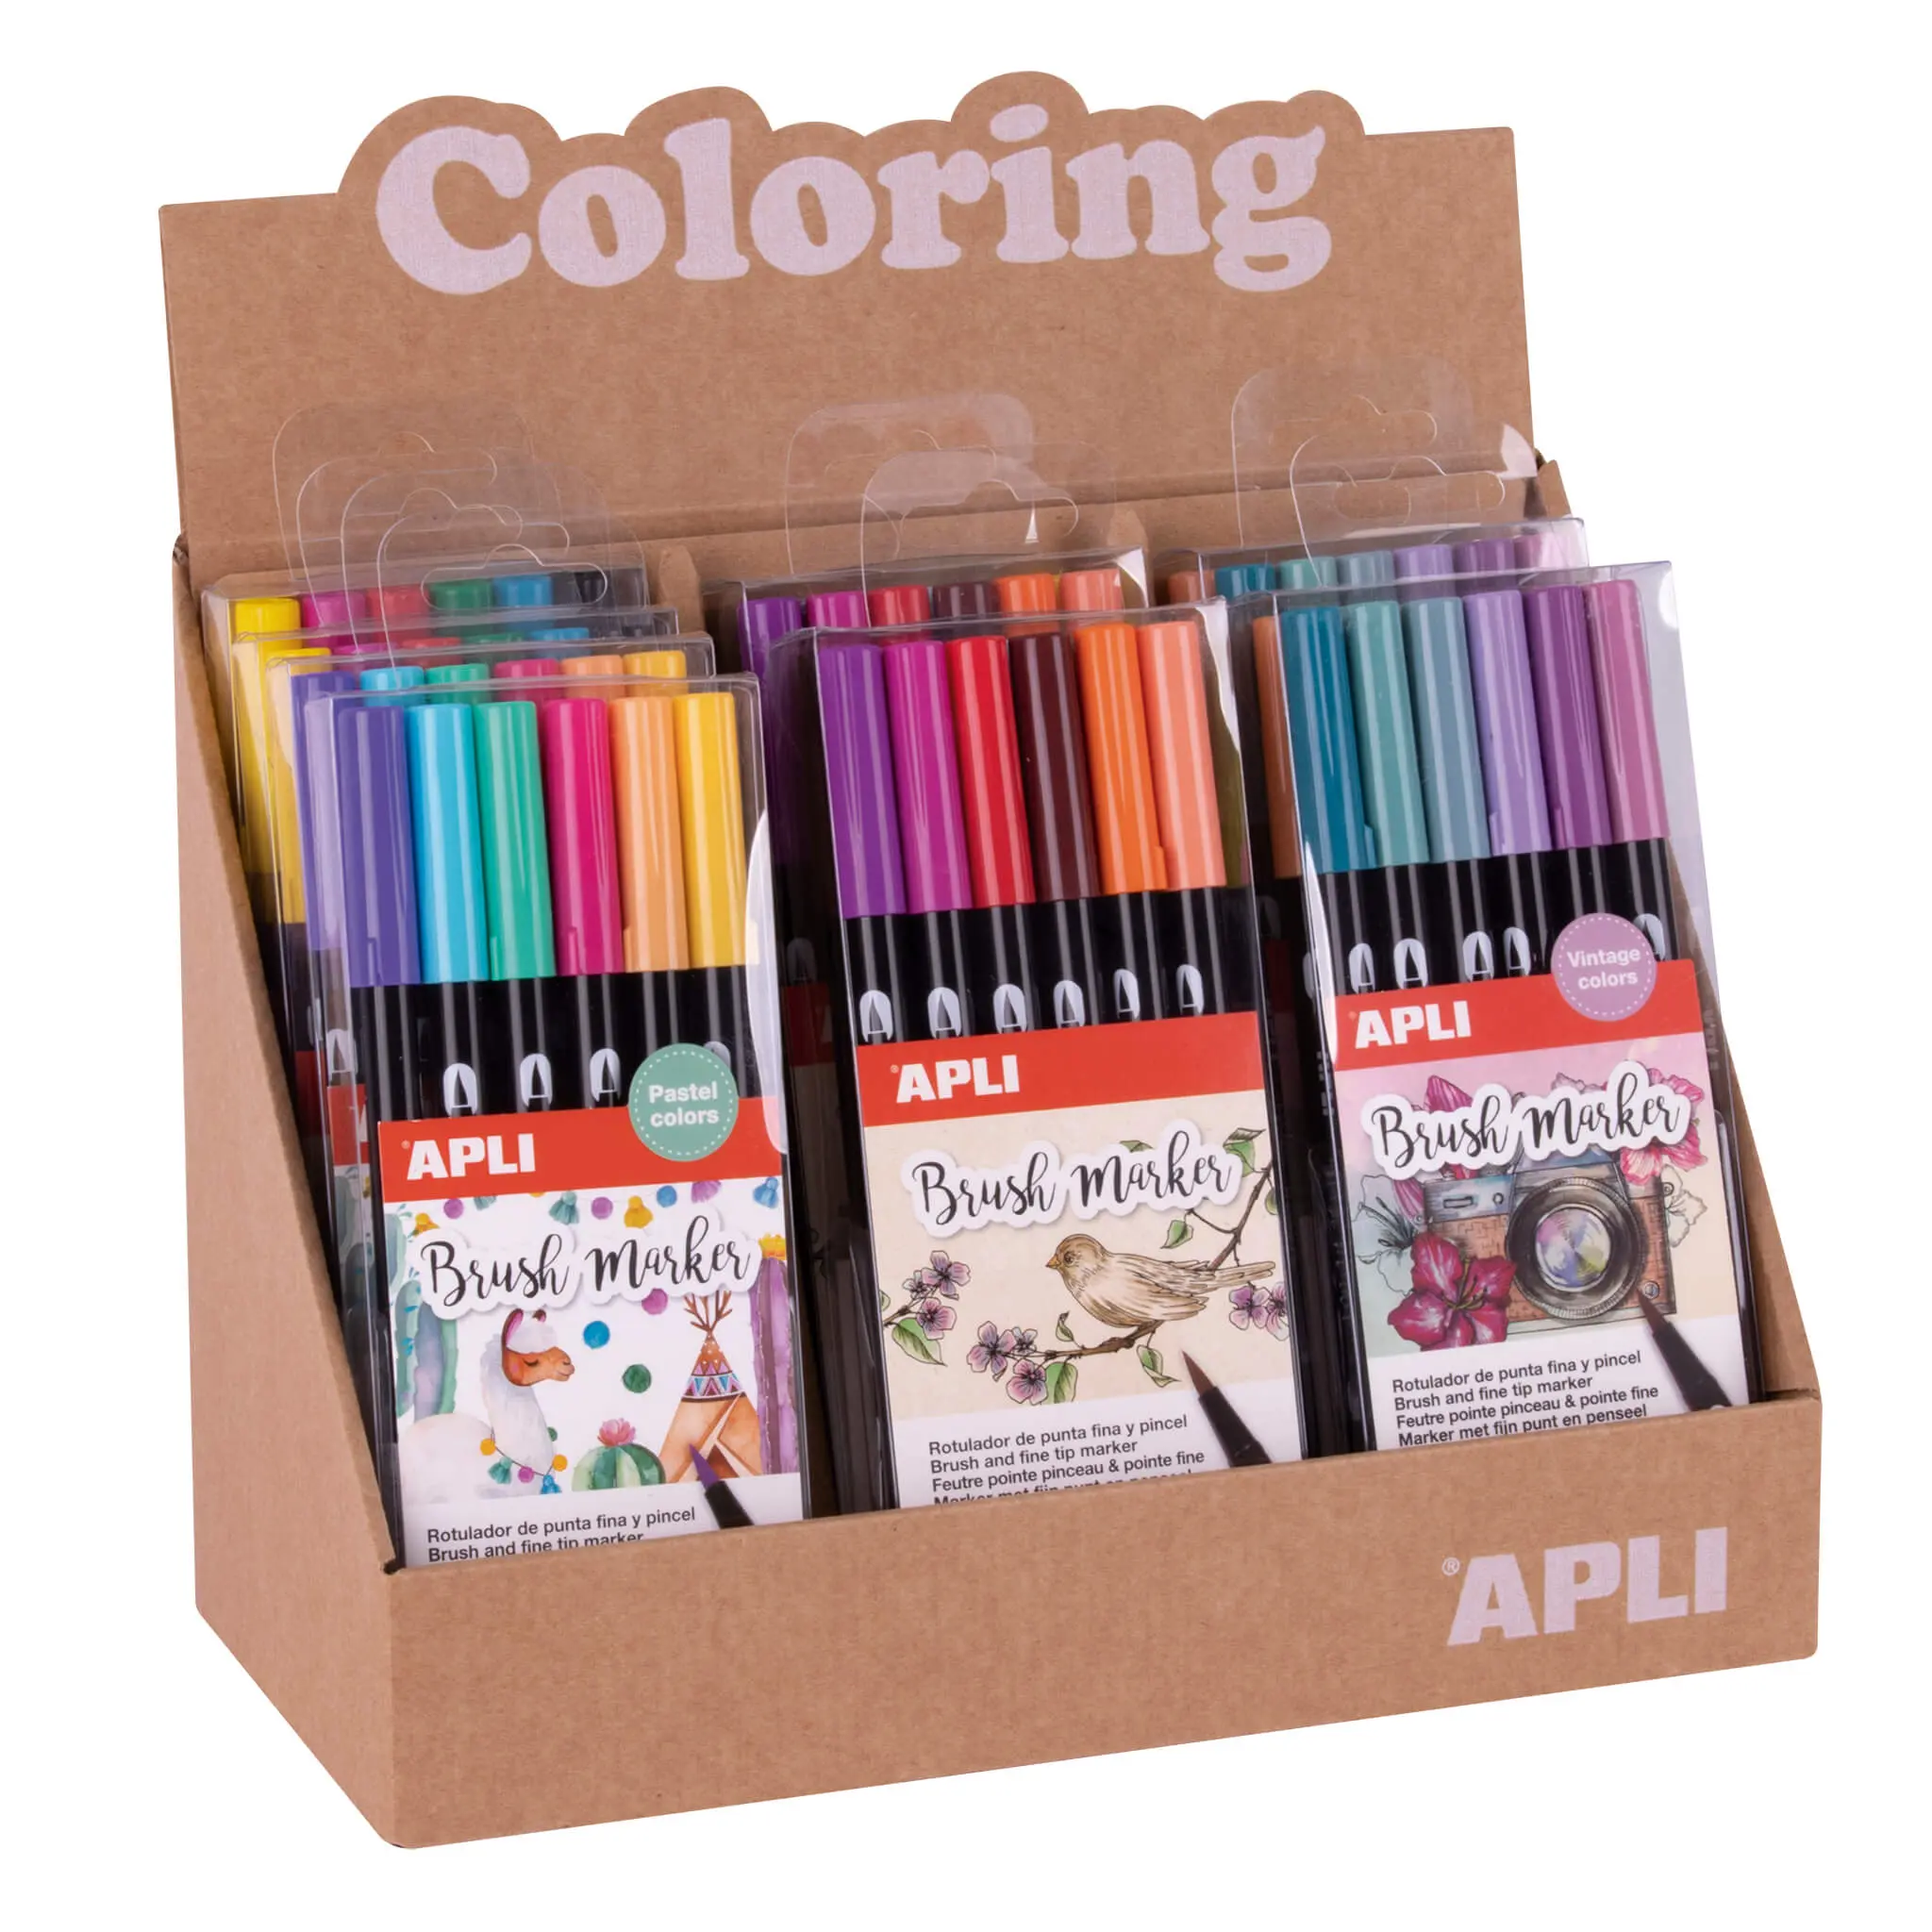 Apli Coloring Brush Markers - Expositor con 8 Packs Surtidos - Doble Punta de Nylon Tipo Pincel de 1